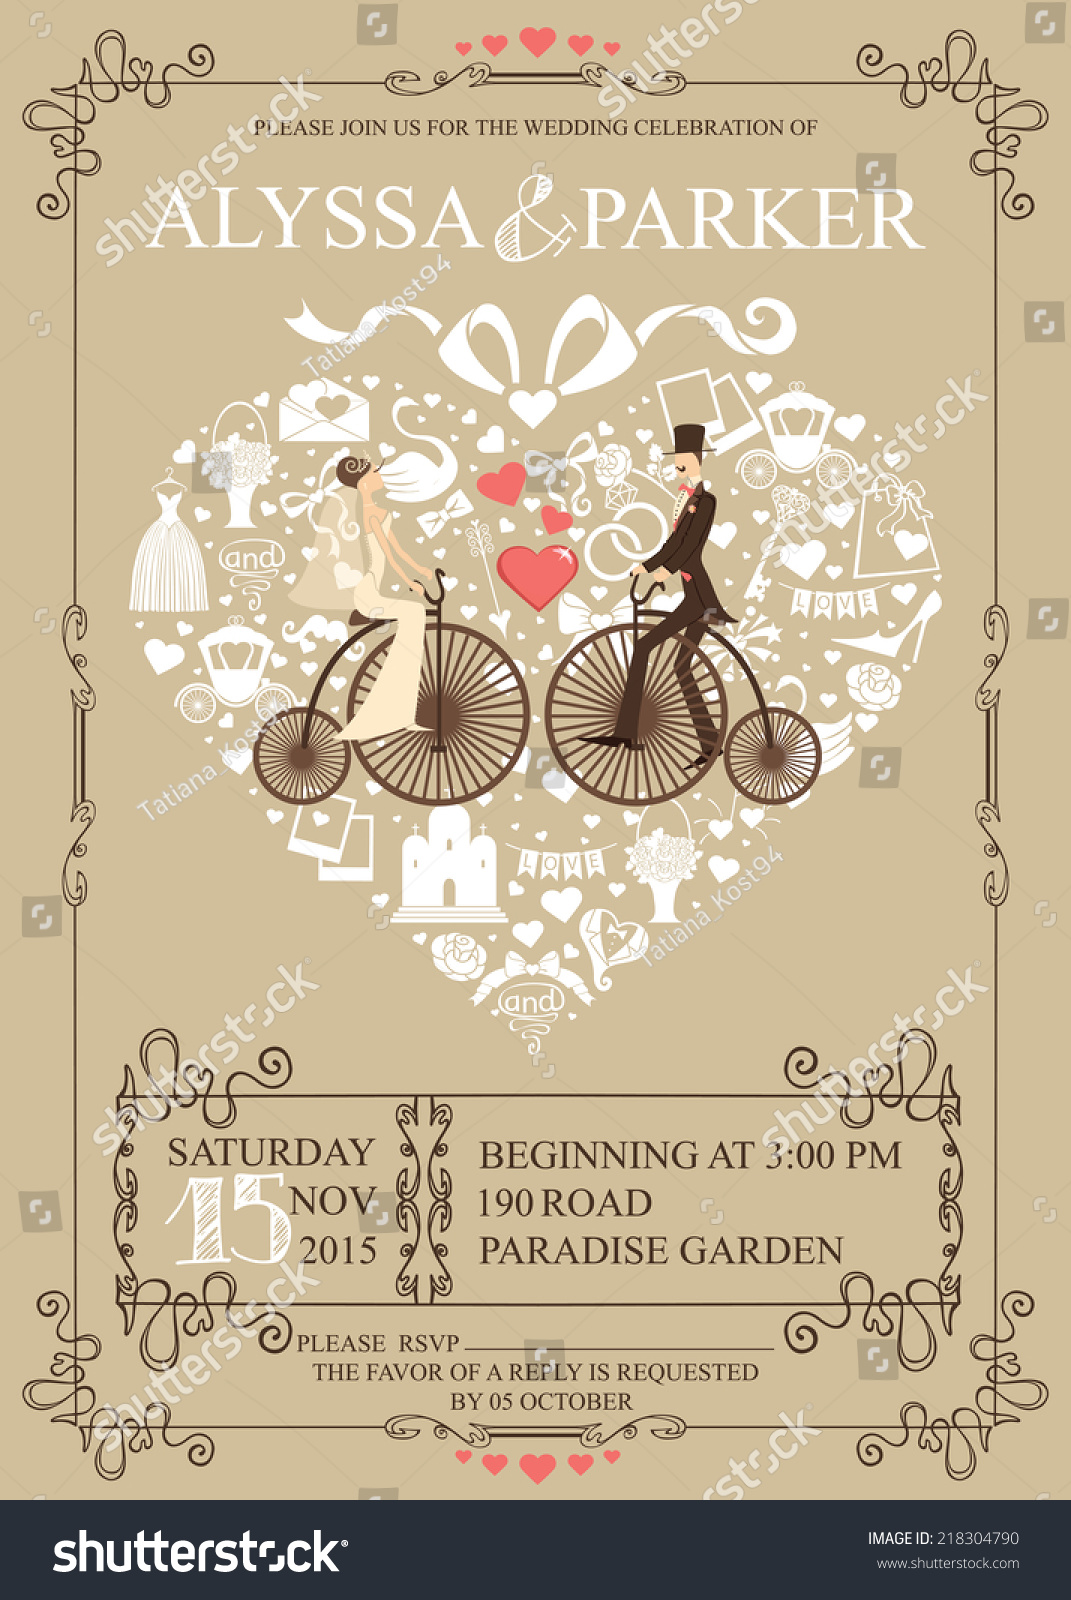 Cute wedding invitations designs